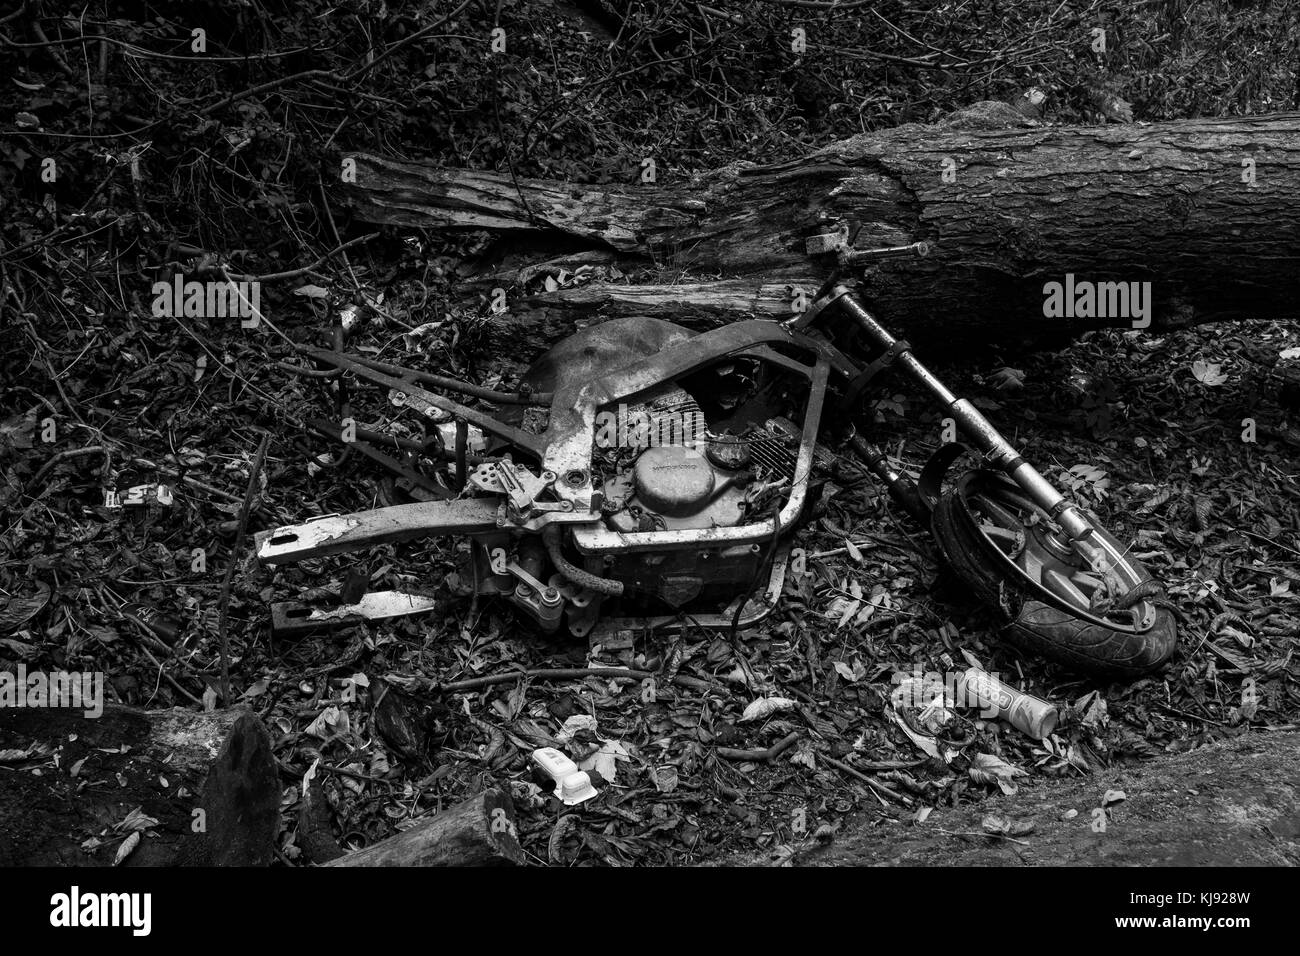 Wreckage of old motorbike Stock Photo